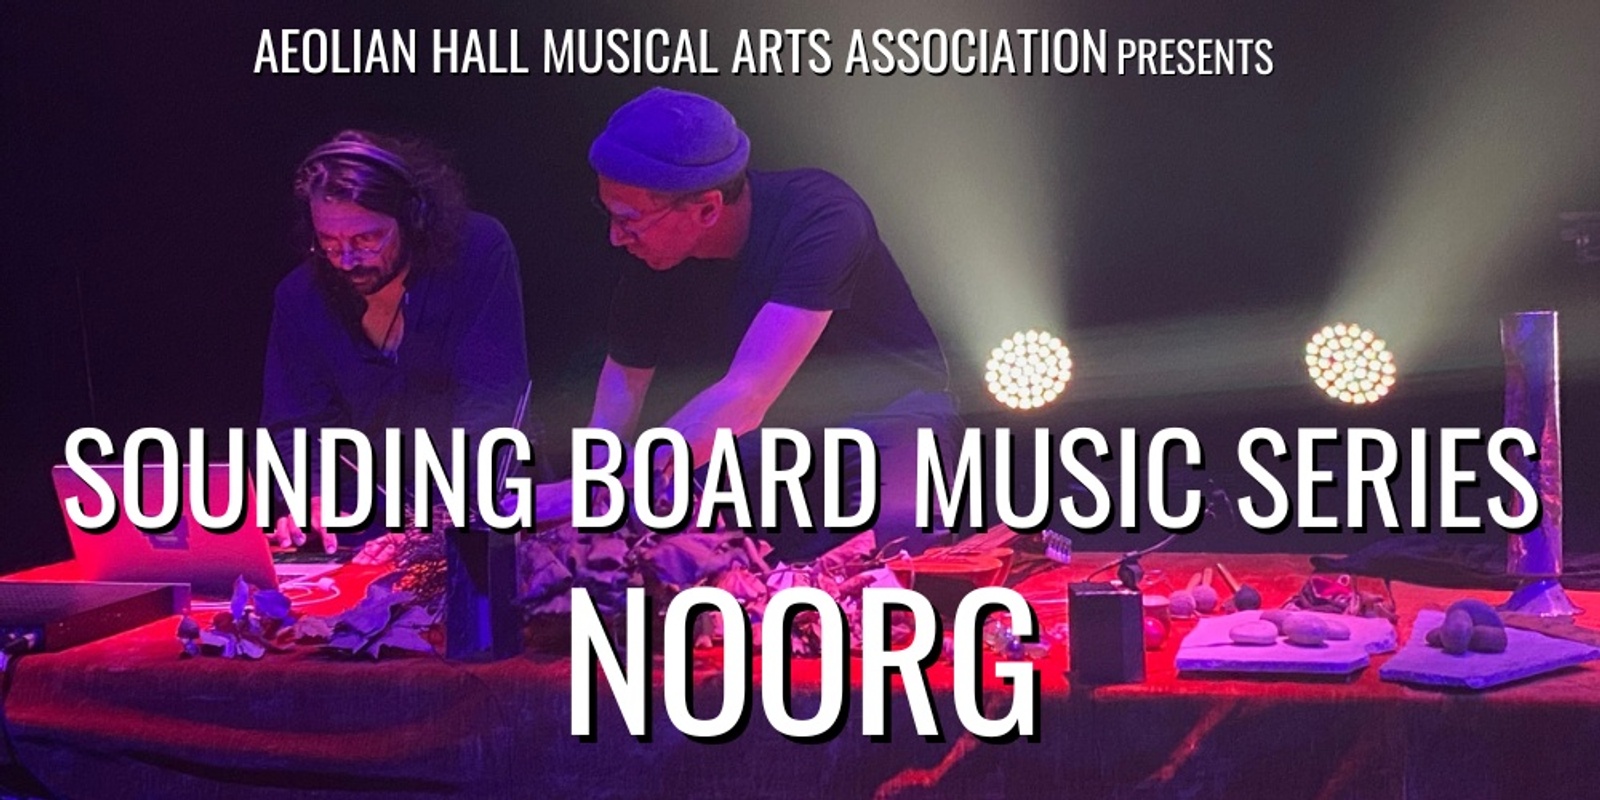 Banner image for Sounding Board Music Series: NOORG